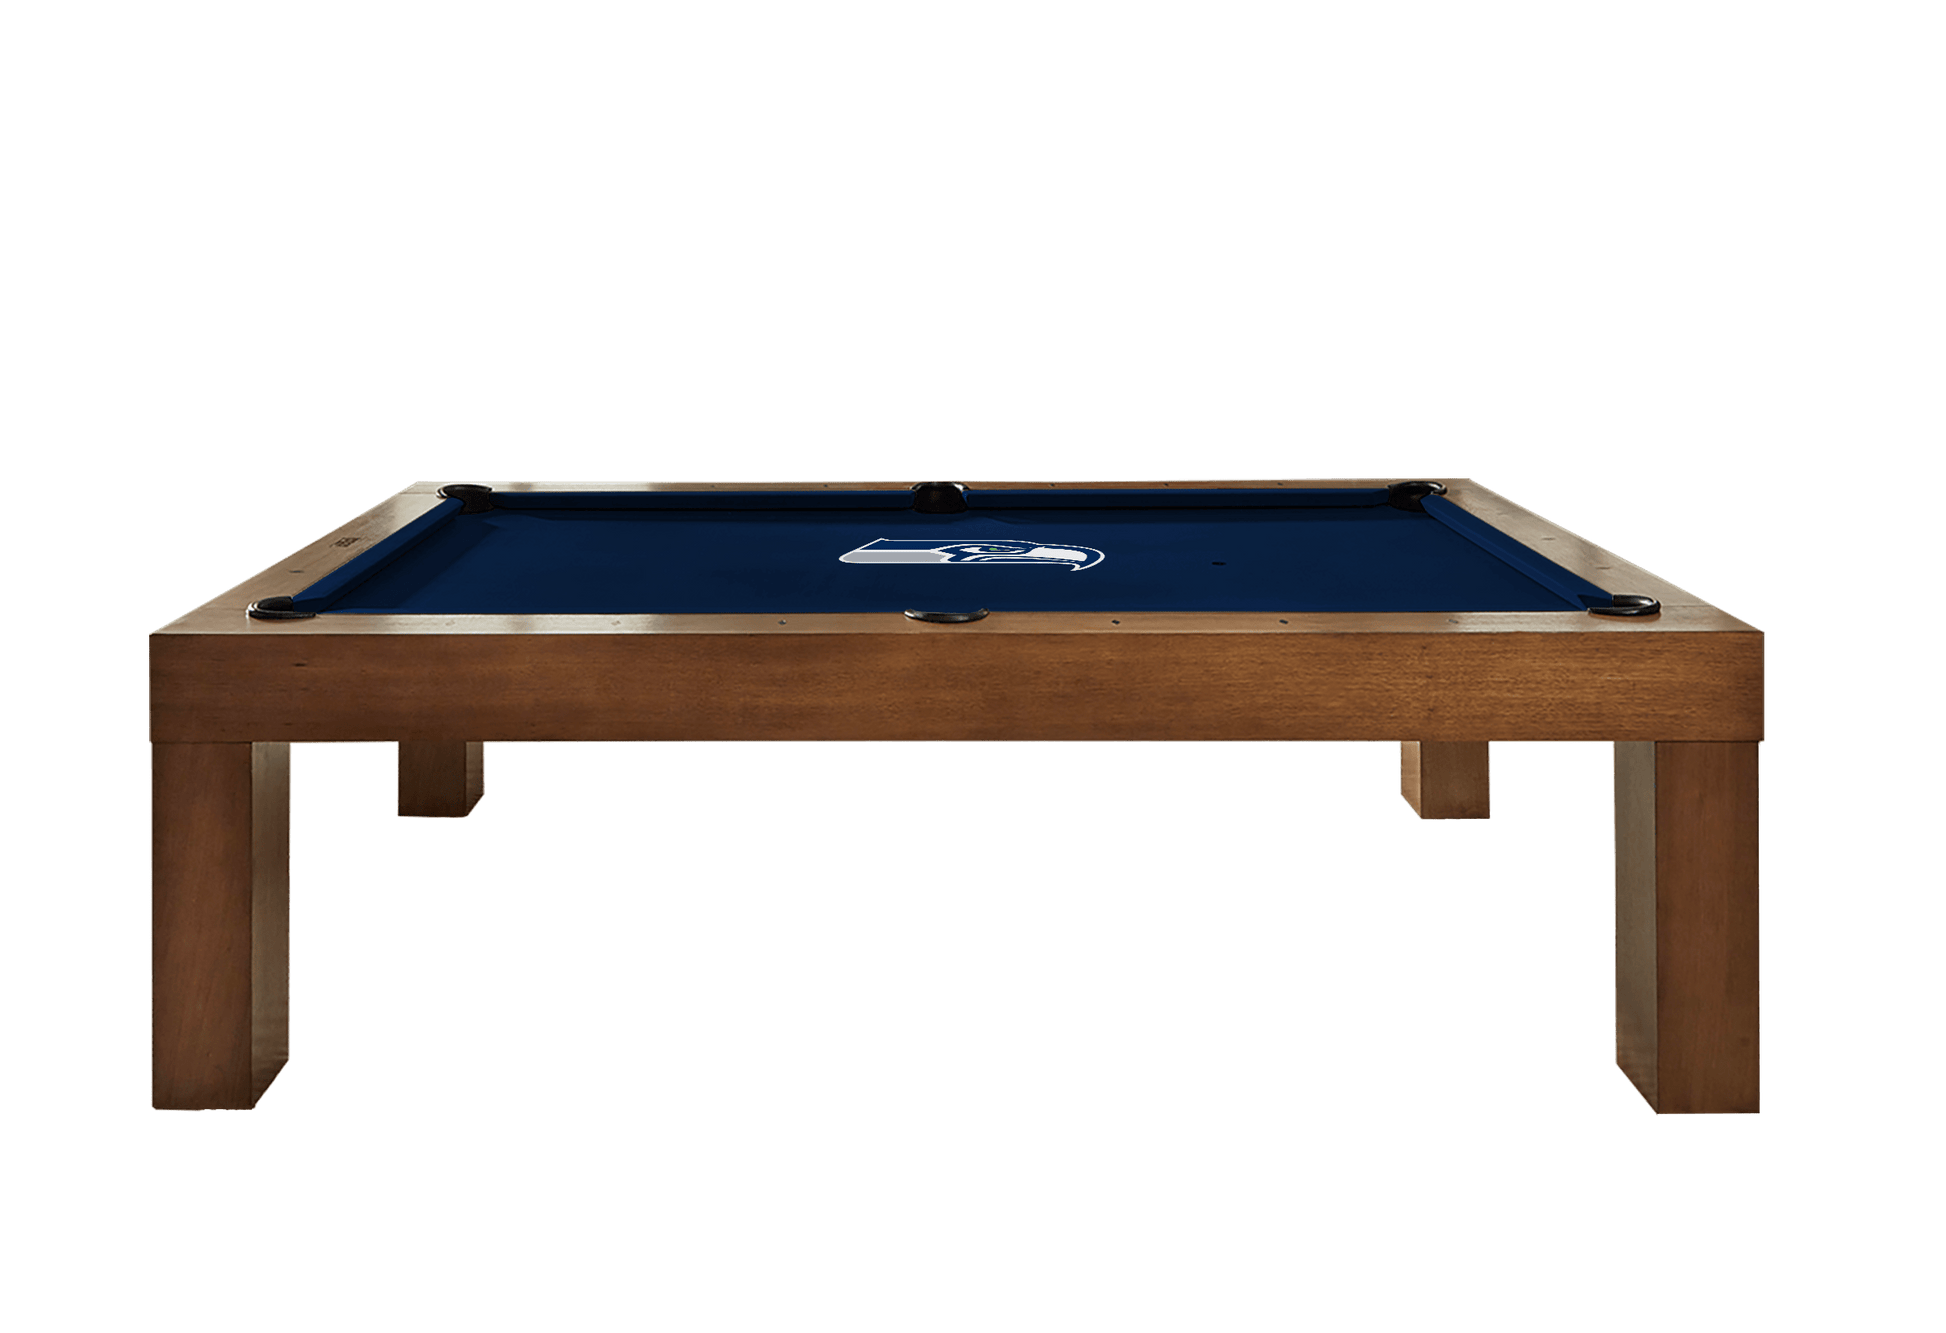 Seattle Seahawks Premium Pool Table Bundle - Walnut Pool Bundle Home Arcade Games   